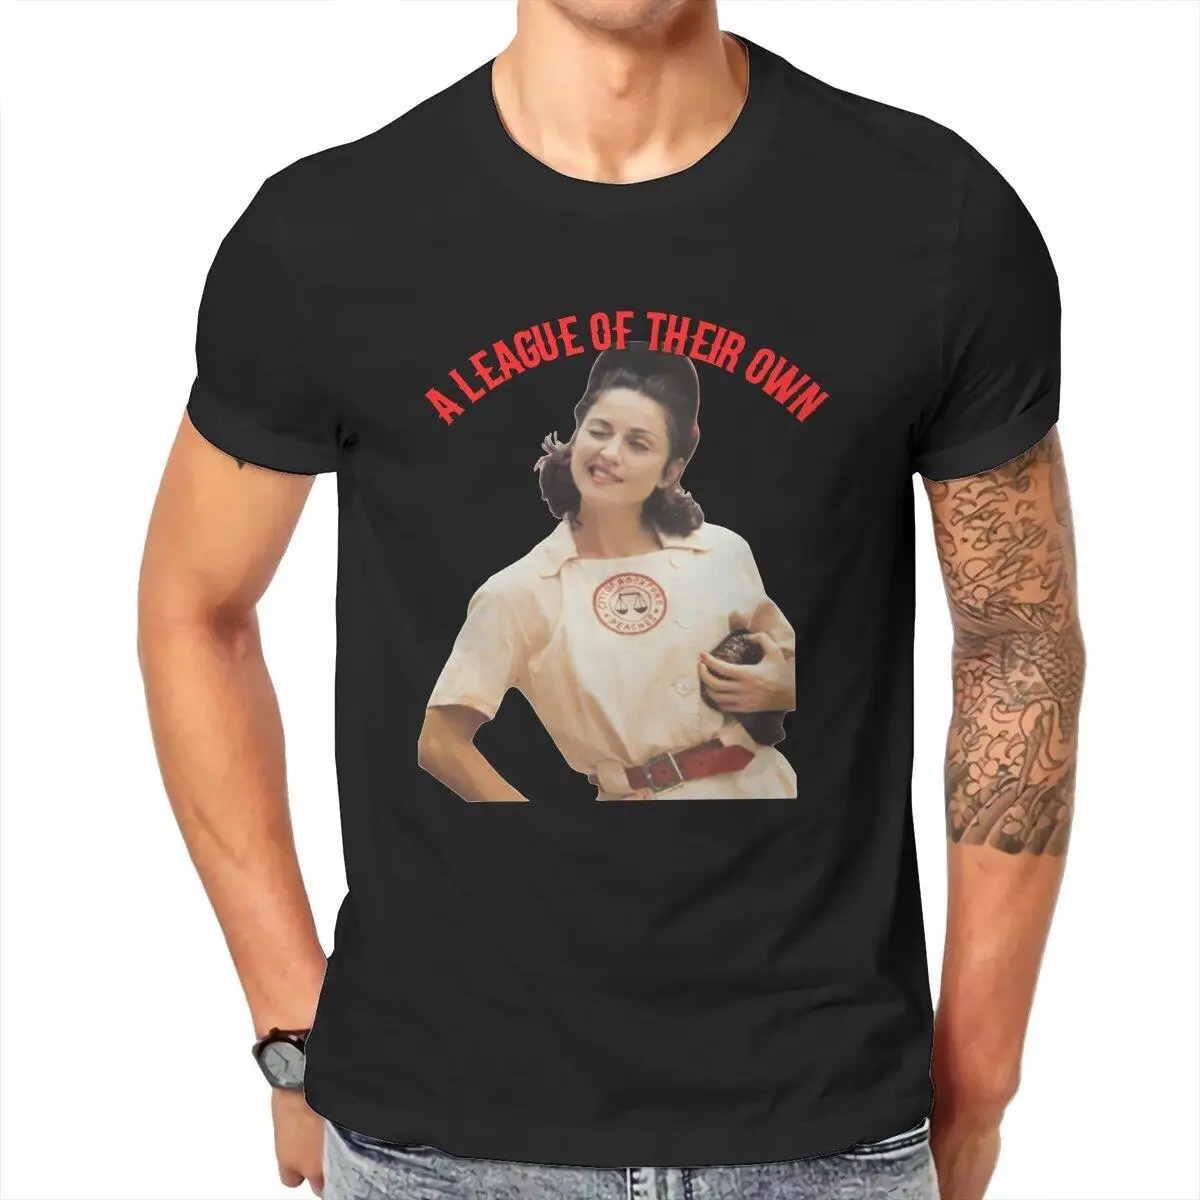 Fashion A League of Their Own  T-Shirt Men O Neck 100% Cotton T Shirt Baseball Comedy Movie Short Sleeve Tees Gift Idea Clothing